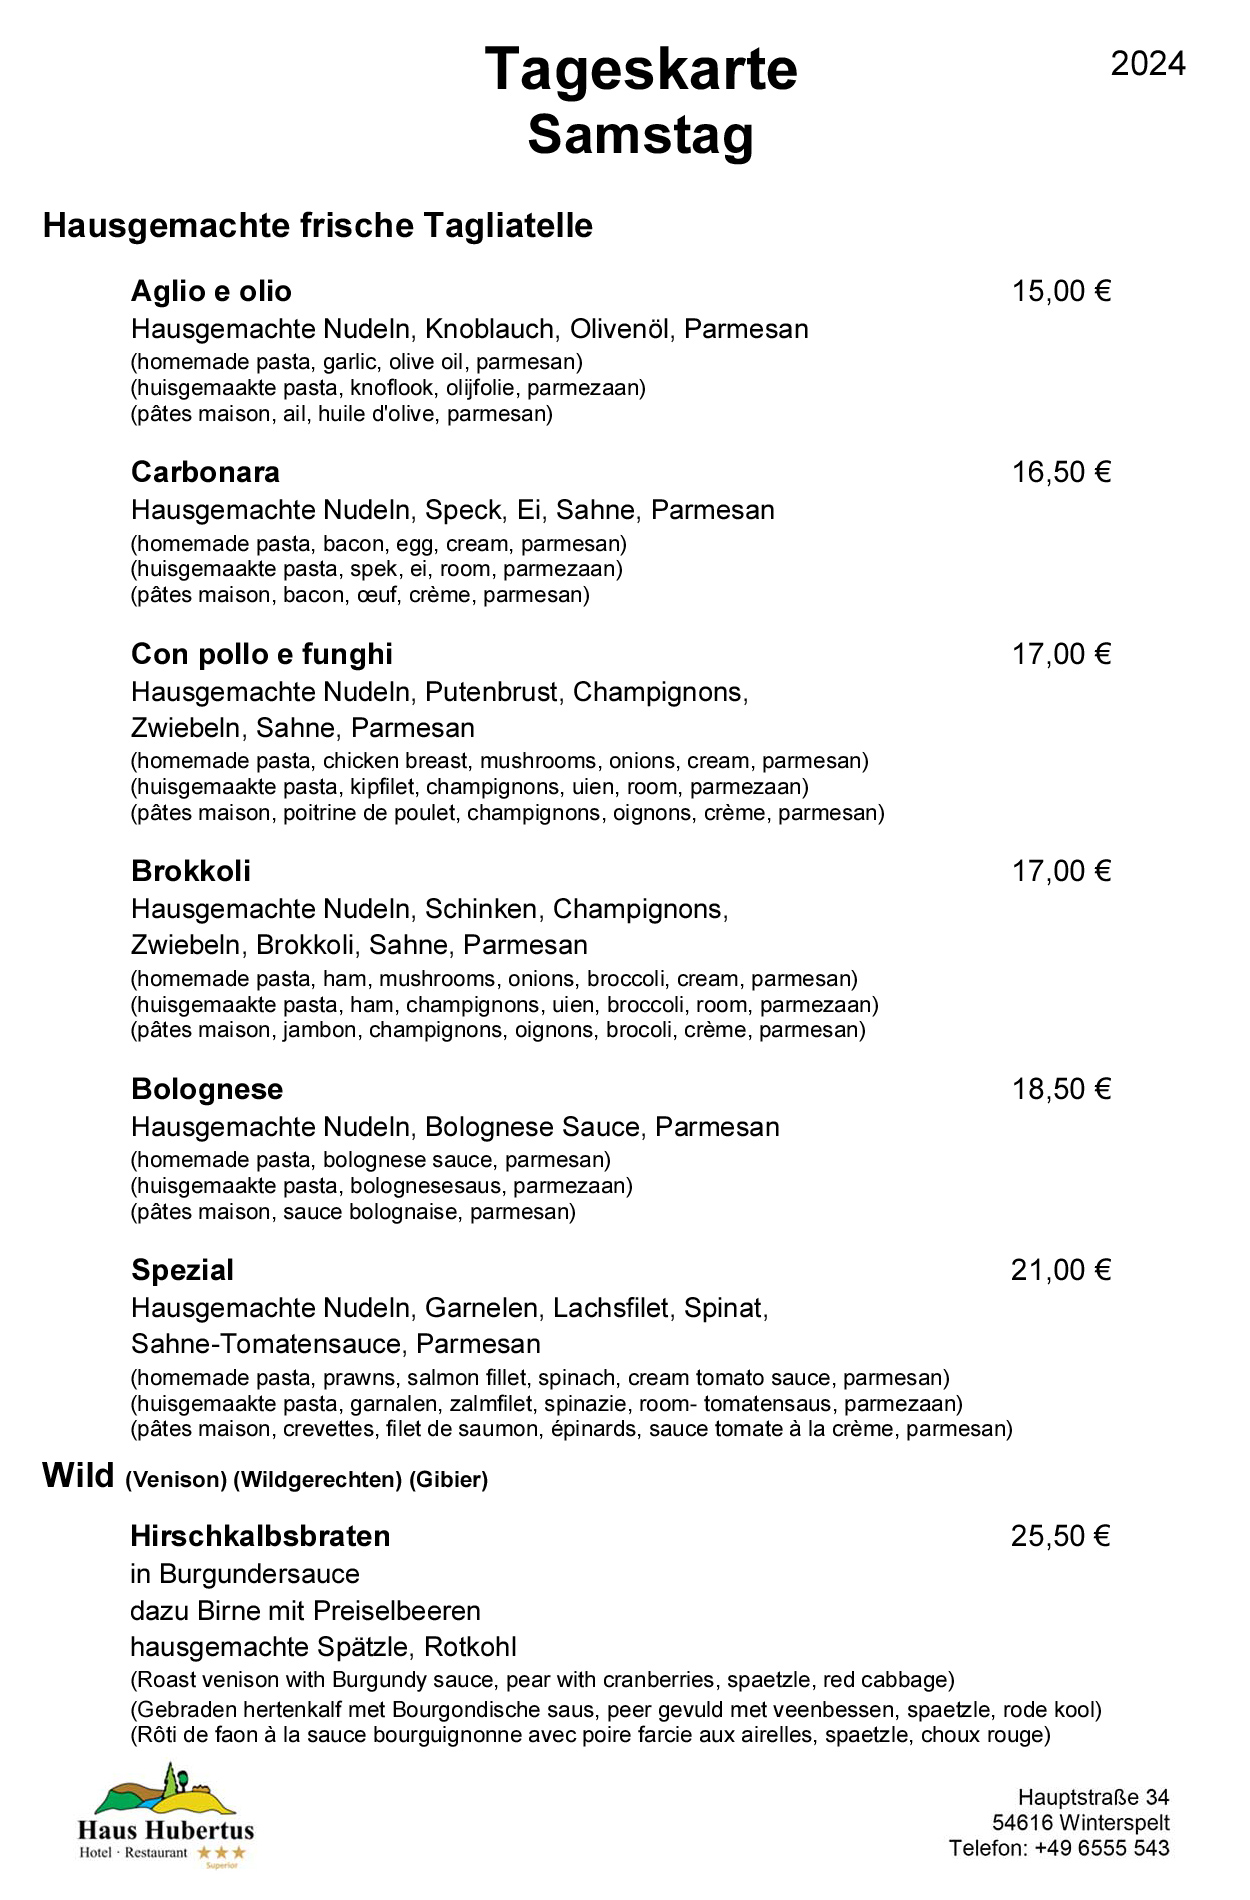 Hotel - Restaurant Haus Hubertus - Speisekarte 01/2024 - Tageskarte / Samstag